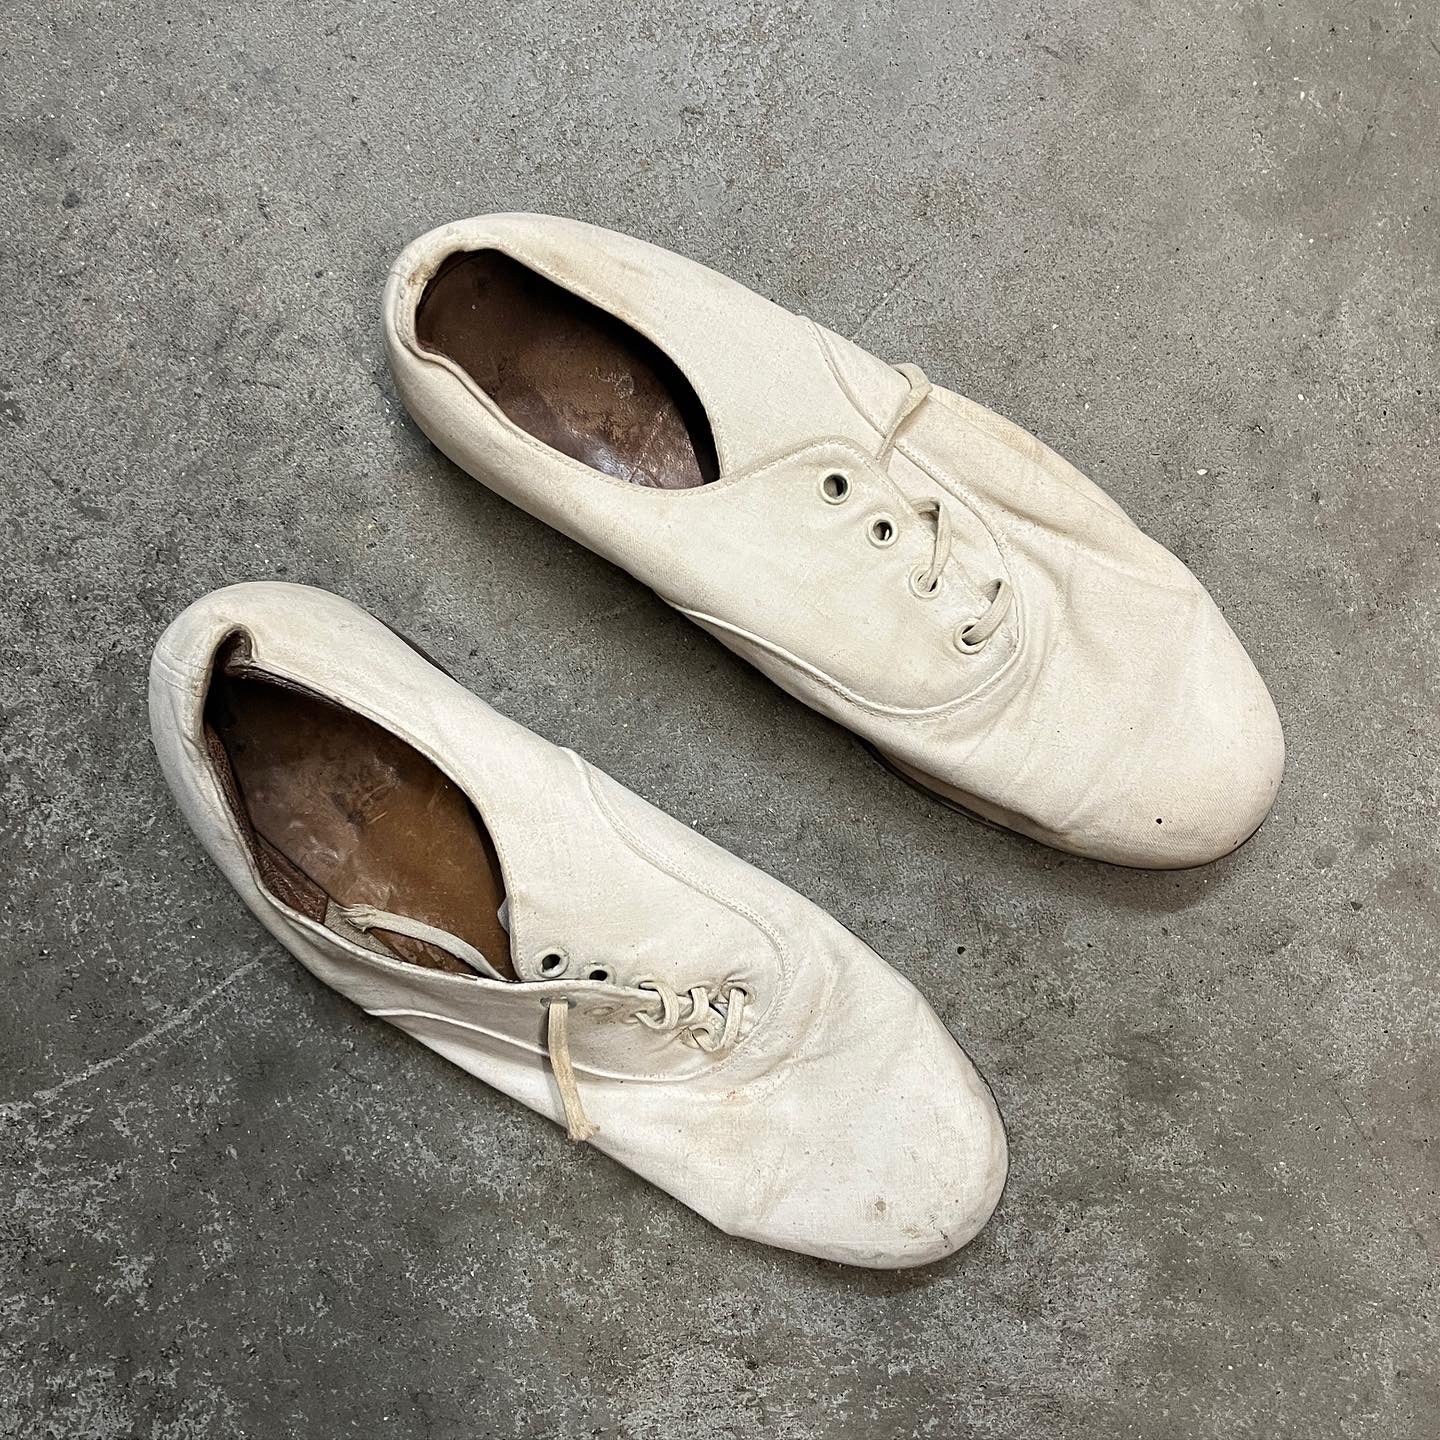 Post WW2 1950s Royal Navy White Oxford Shoes